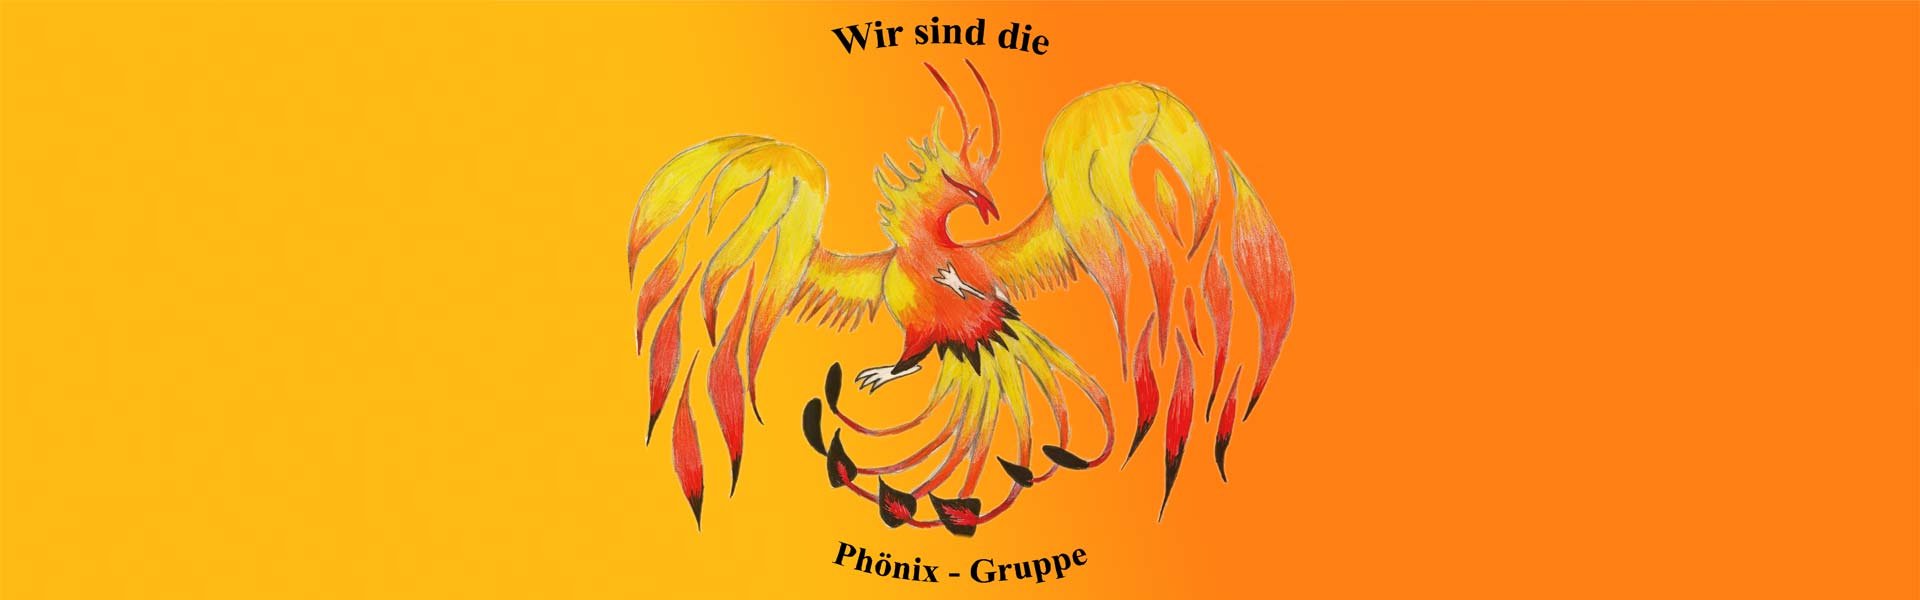 211202_Phoenix_Gruppe_2019-2 (c) Caritas Rhein-Erft